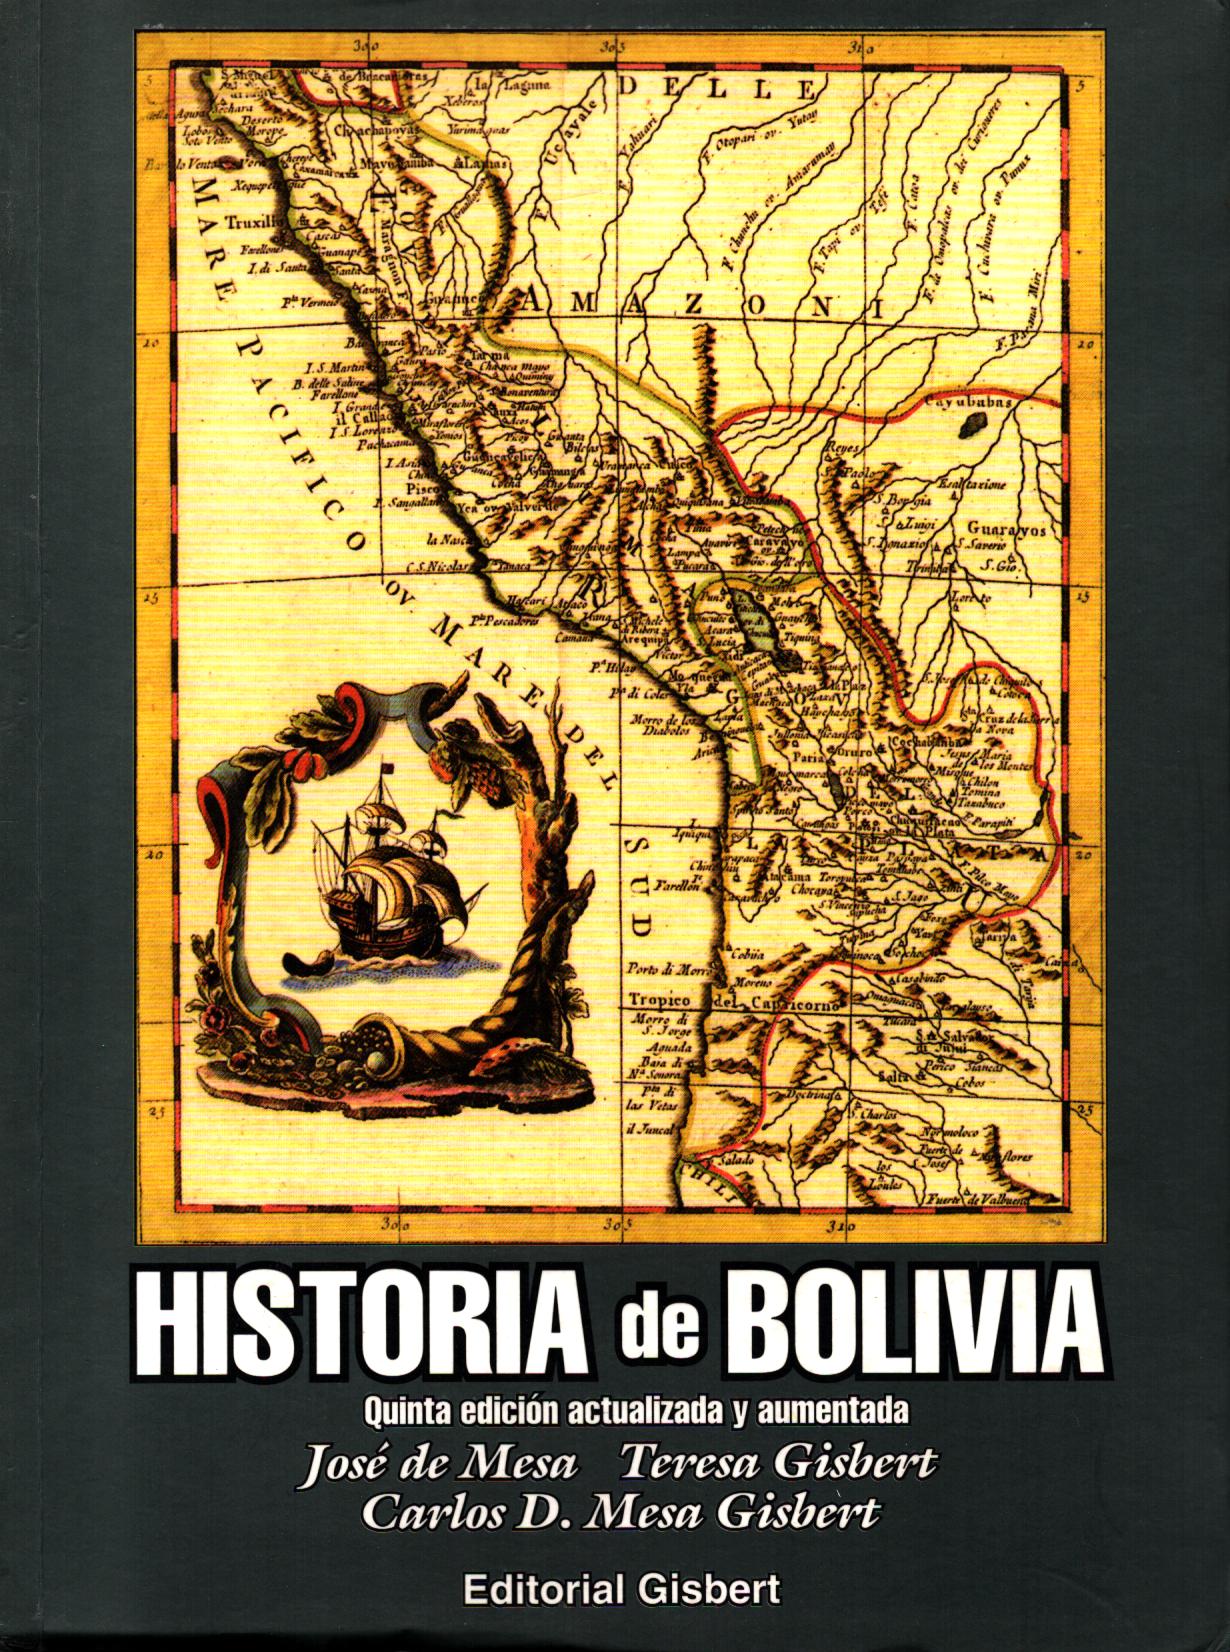 Historia De Bolivia Quinta Edición Actualizada Y Aumentada José De Mesa Teresa Gisbert 7257